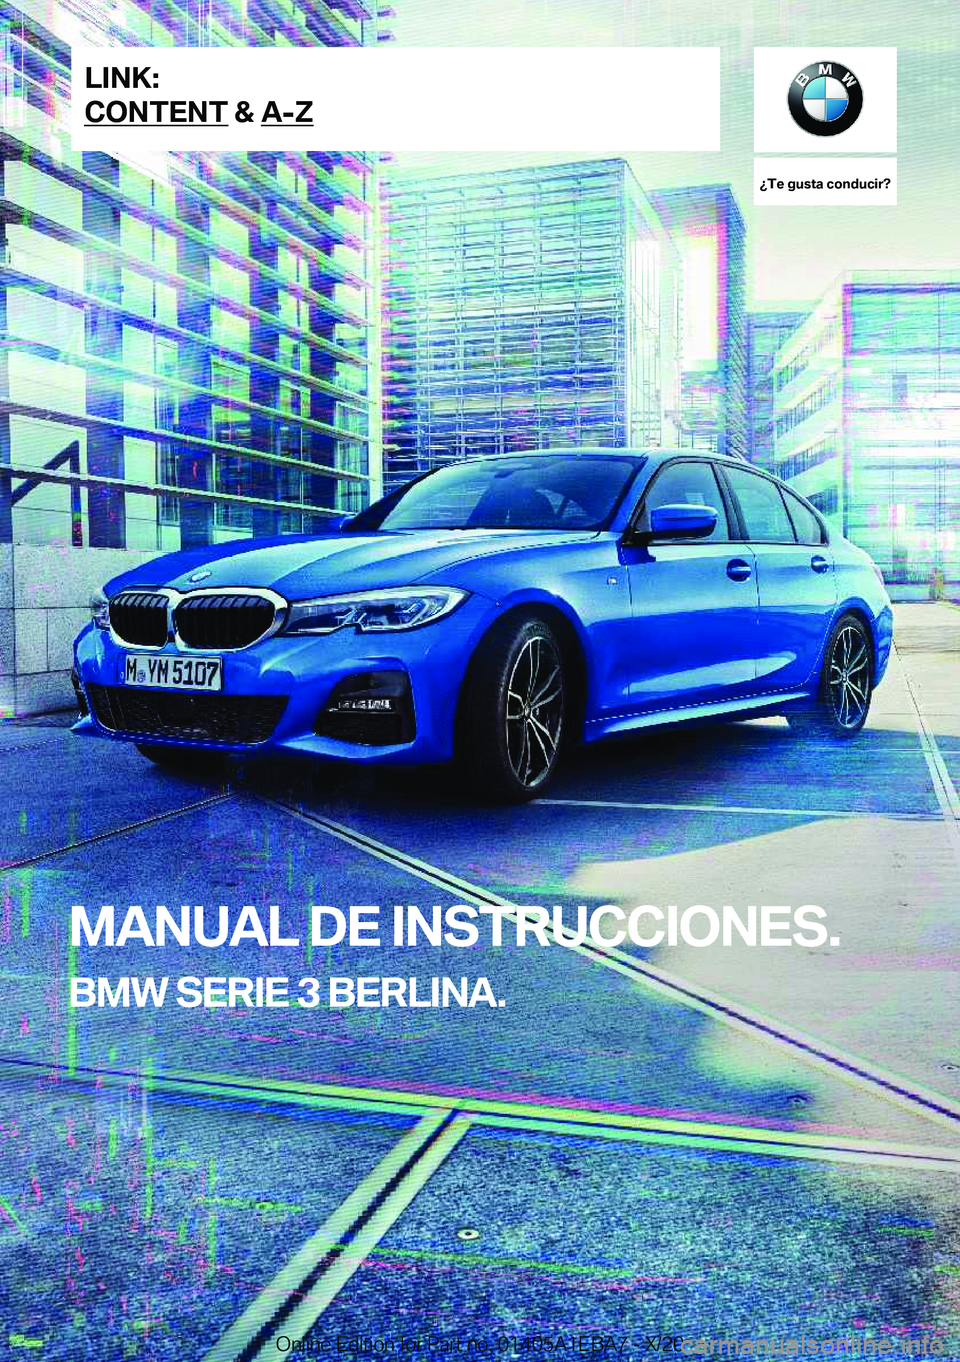 BMW 3 SERIES 2021  Manuales de Empleo (in Spanish) ��T�e��g�u�s�t�a��c�o�n�d�u�c�i�r� 
�M�A�N�U�A�L��D�E��I�N�S�T�R�U�C�C�I�O�N�E�S�.
�B�M�W��S�E�R�I�E��3��B�E�R�L�I�N�A�.�L�I�N�K�:
�C�O�N�T�E�N�T��&��A�-�Z�O�n�l�i�n�e��E�d�i�t�i�o�n��f�o�